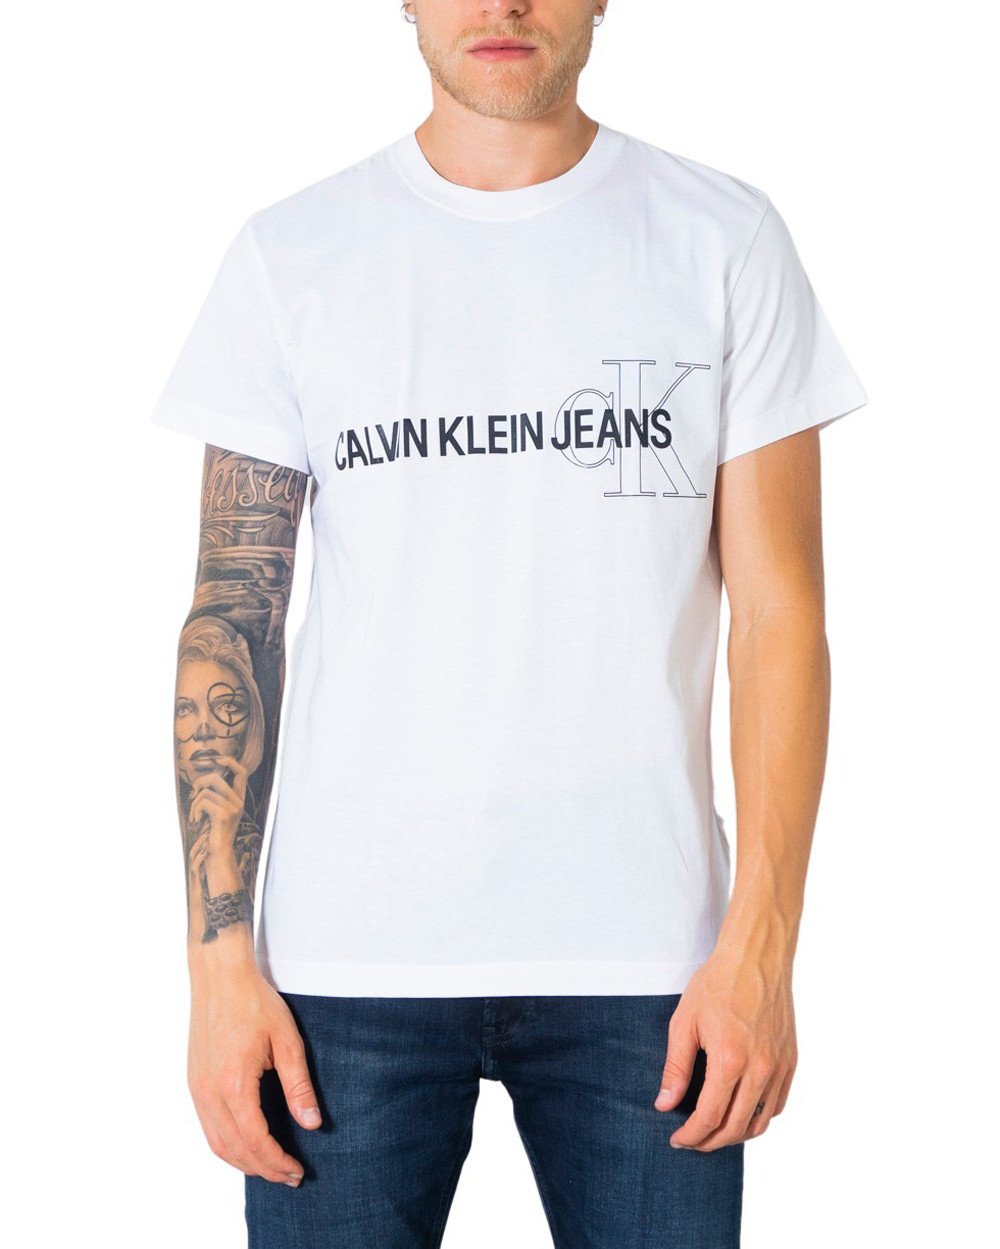 Calvin Klein Jeans Men's T-Shirt Various Colours 305644 - white-3 XS